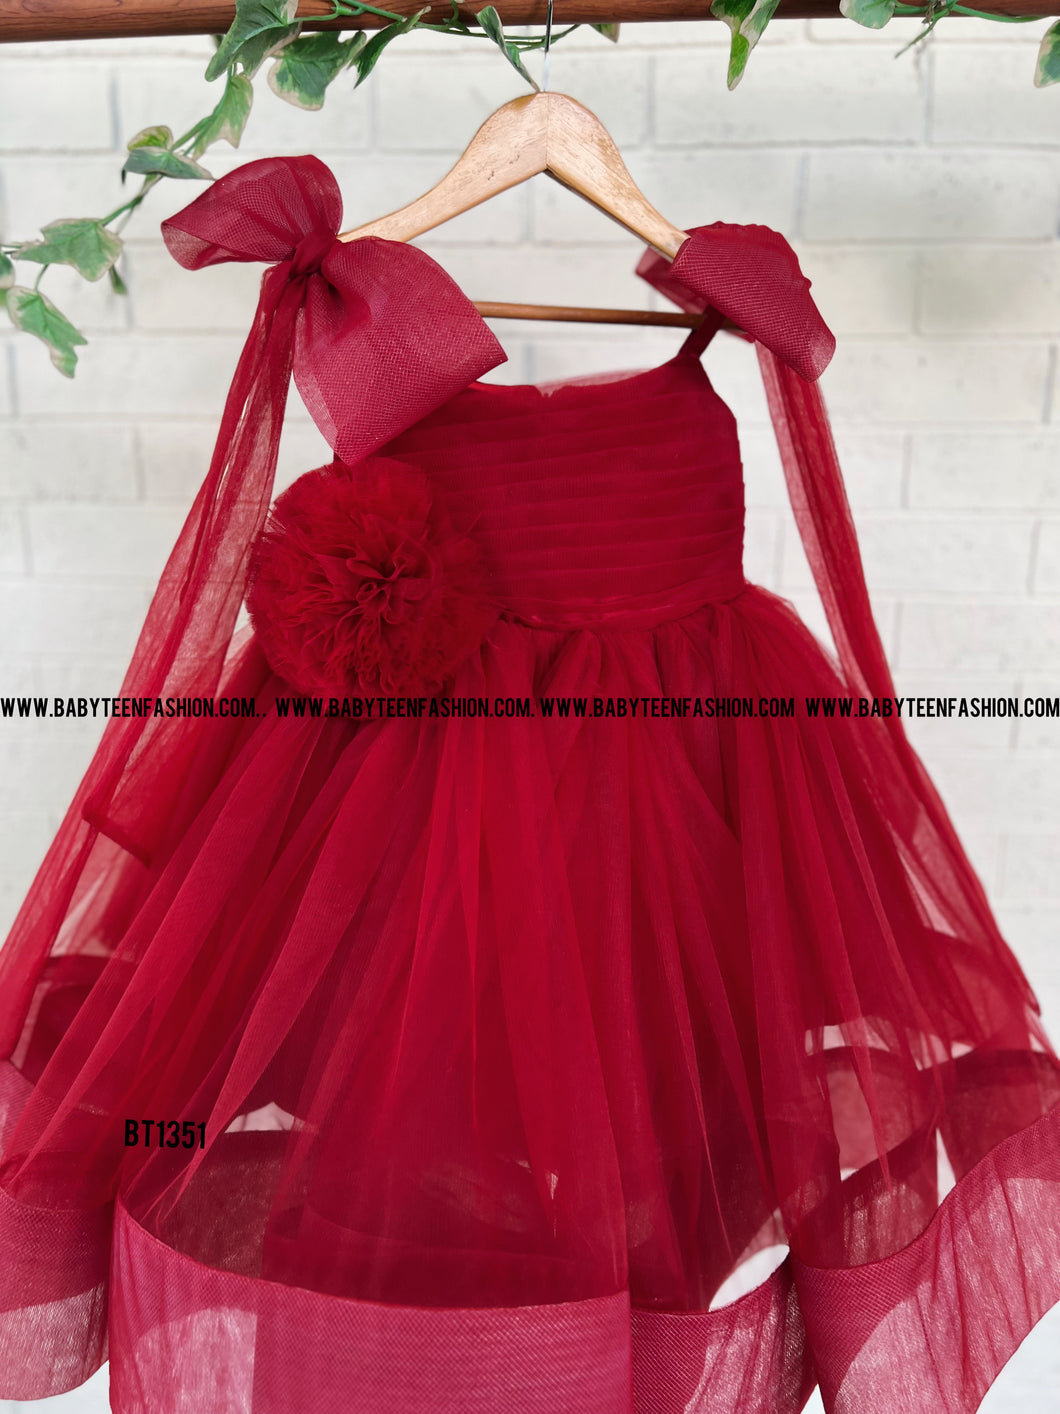 BT1351 Ruby Whirl - Baby's Celebration Dress